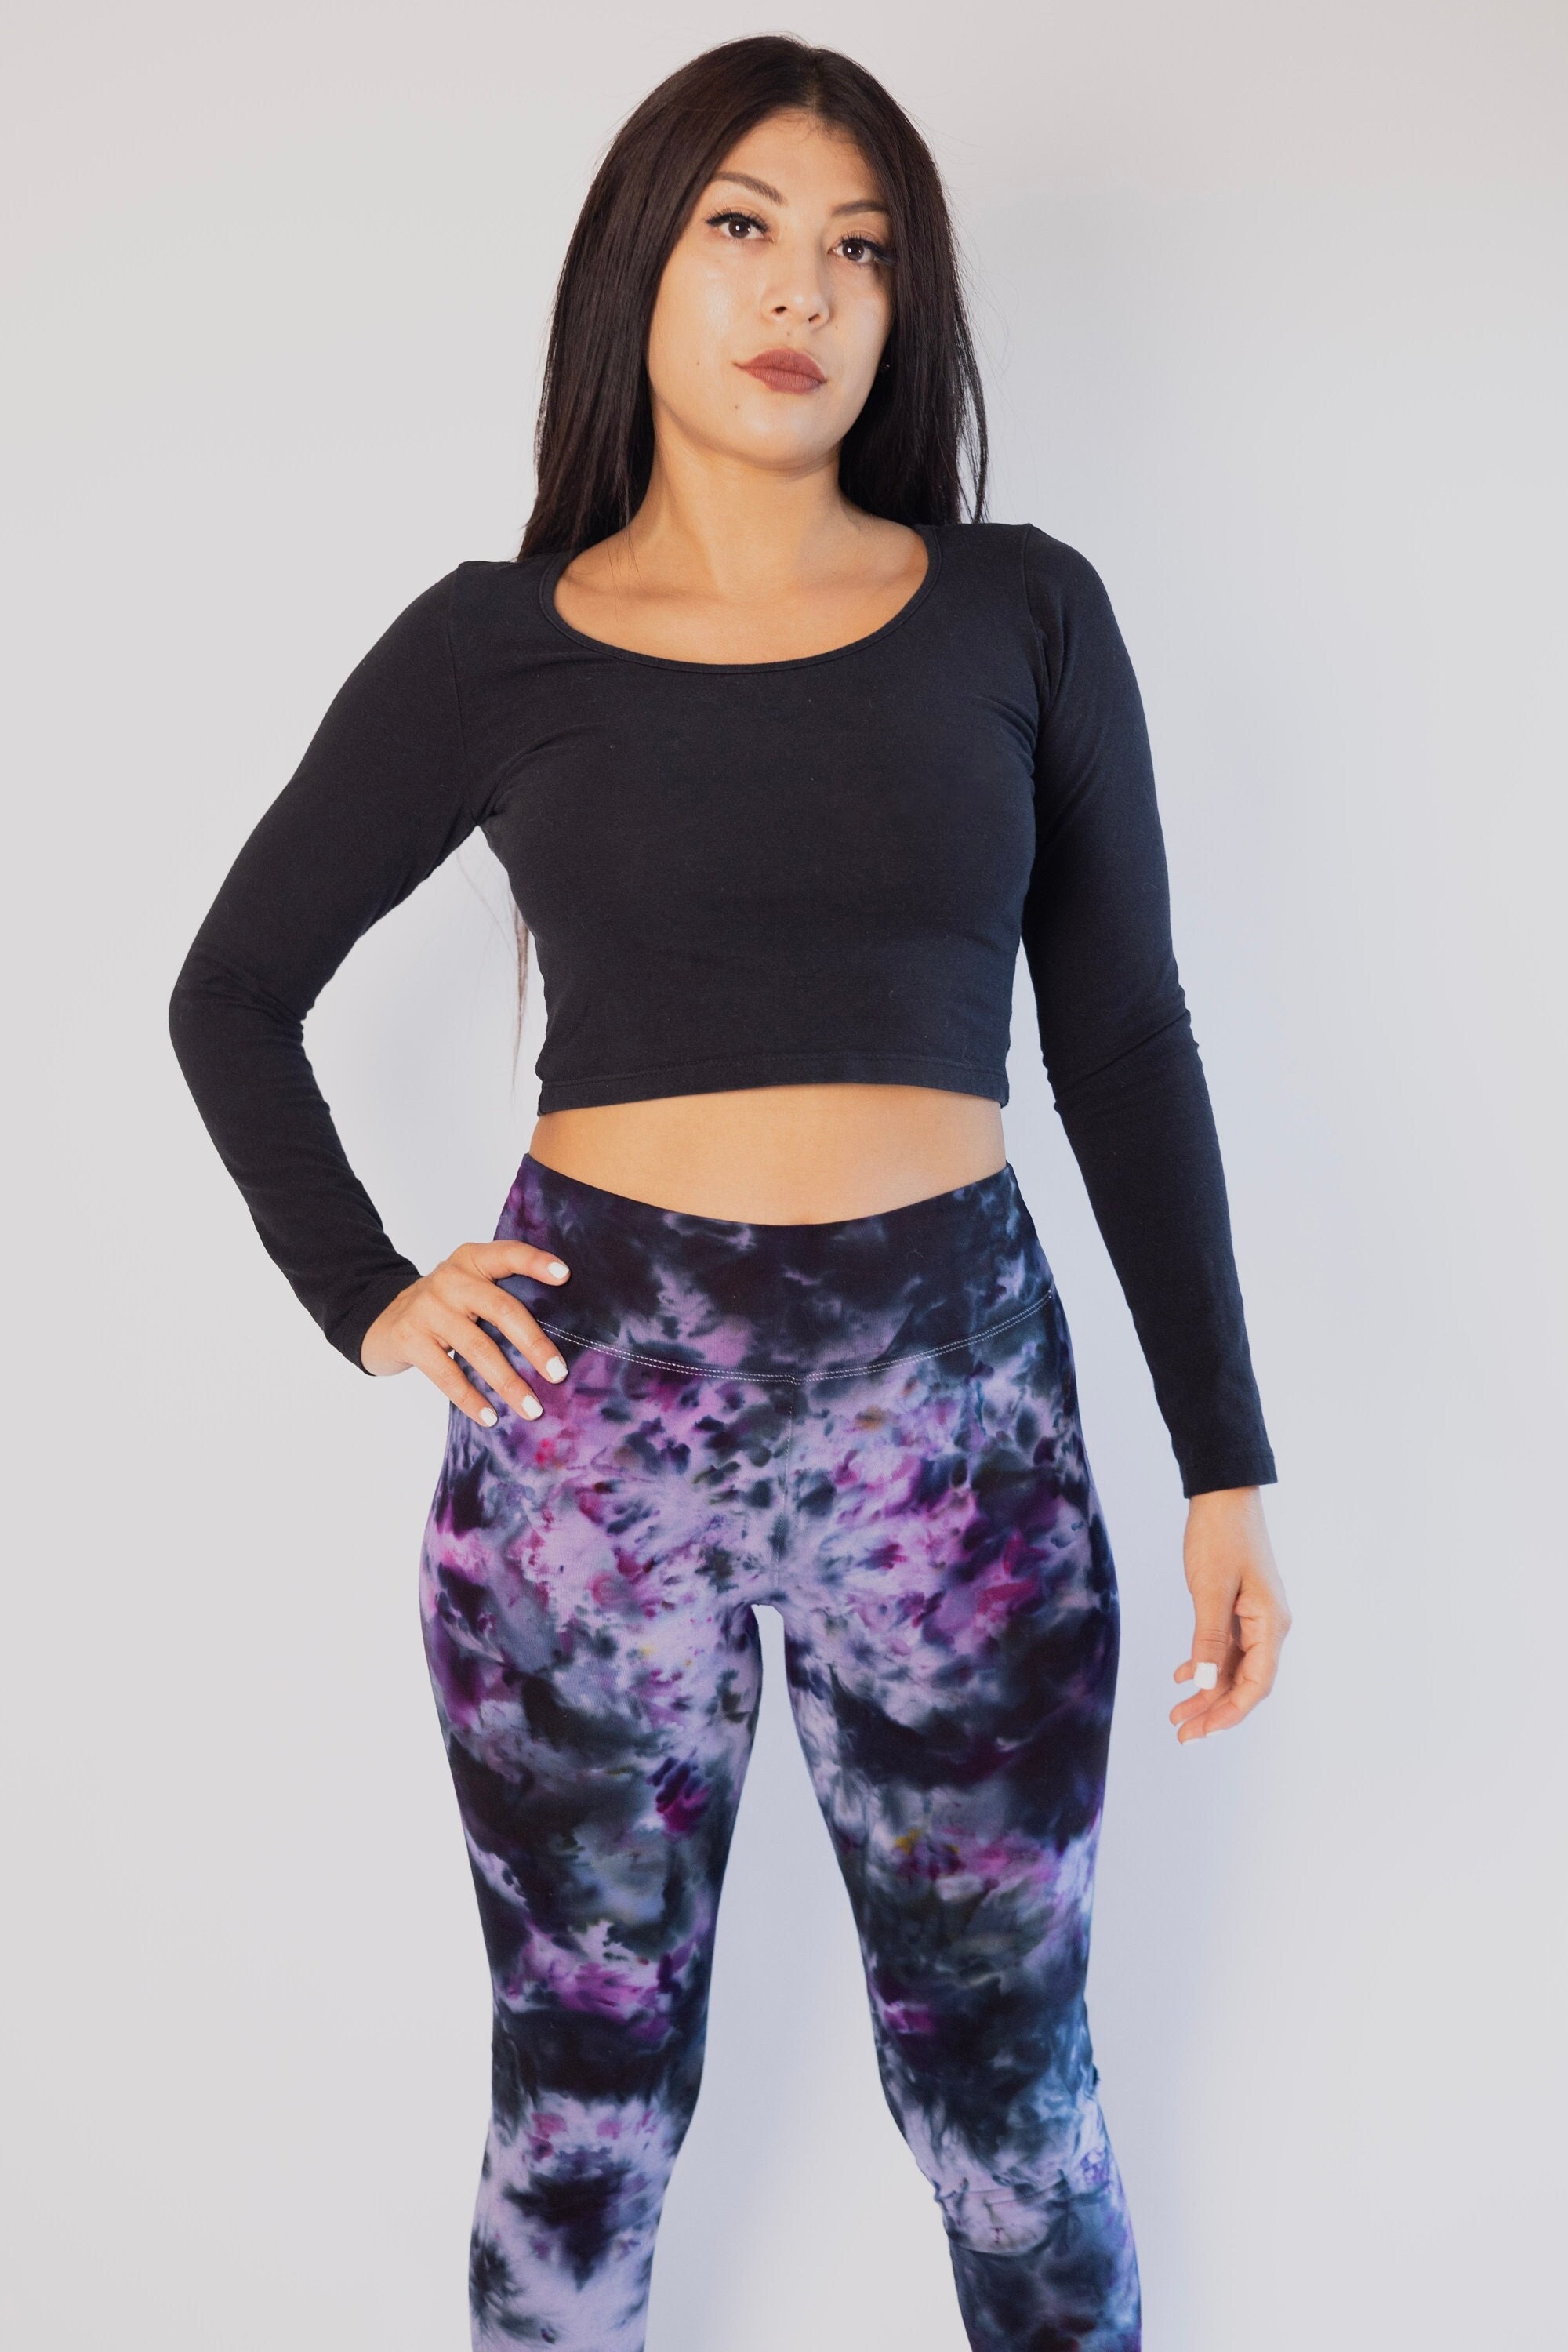 STARBILD Women Seamless Long Sleeve Yoga Crop Top Thumb Hole Compression  Workout Activewear Shirts